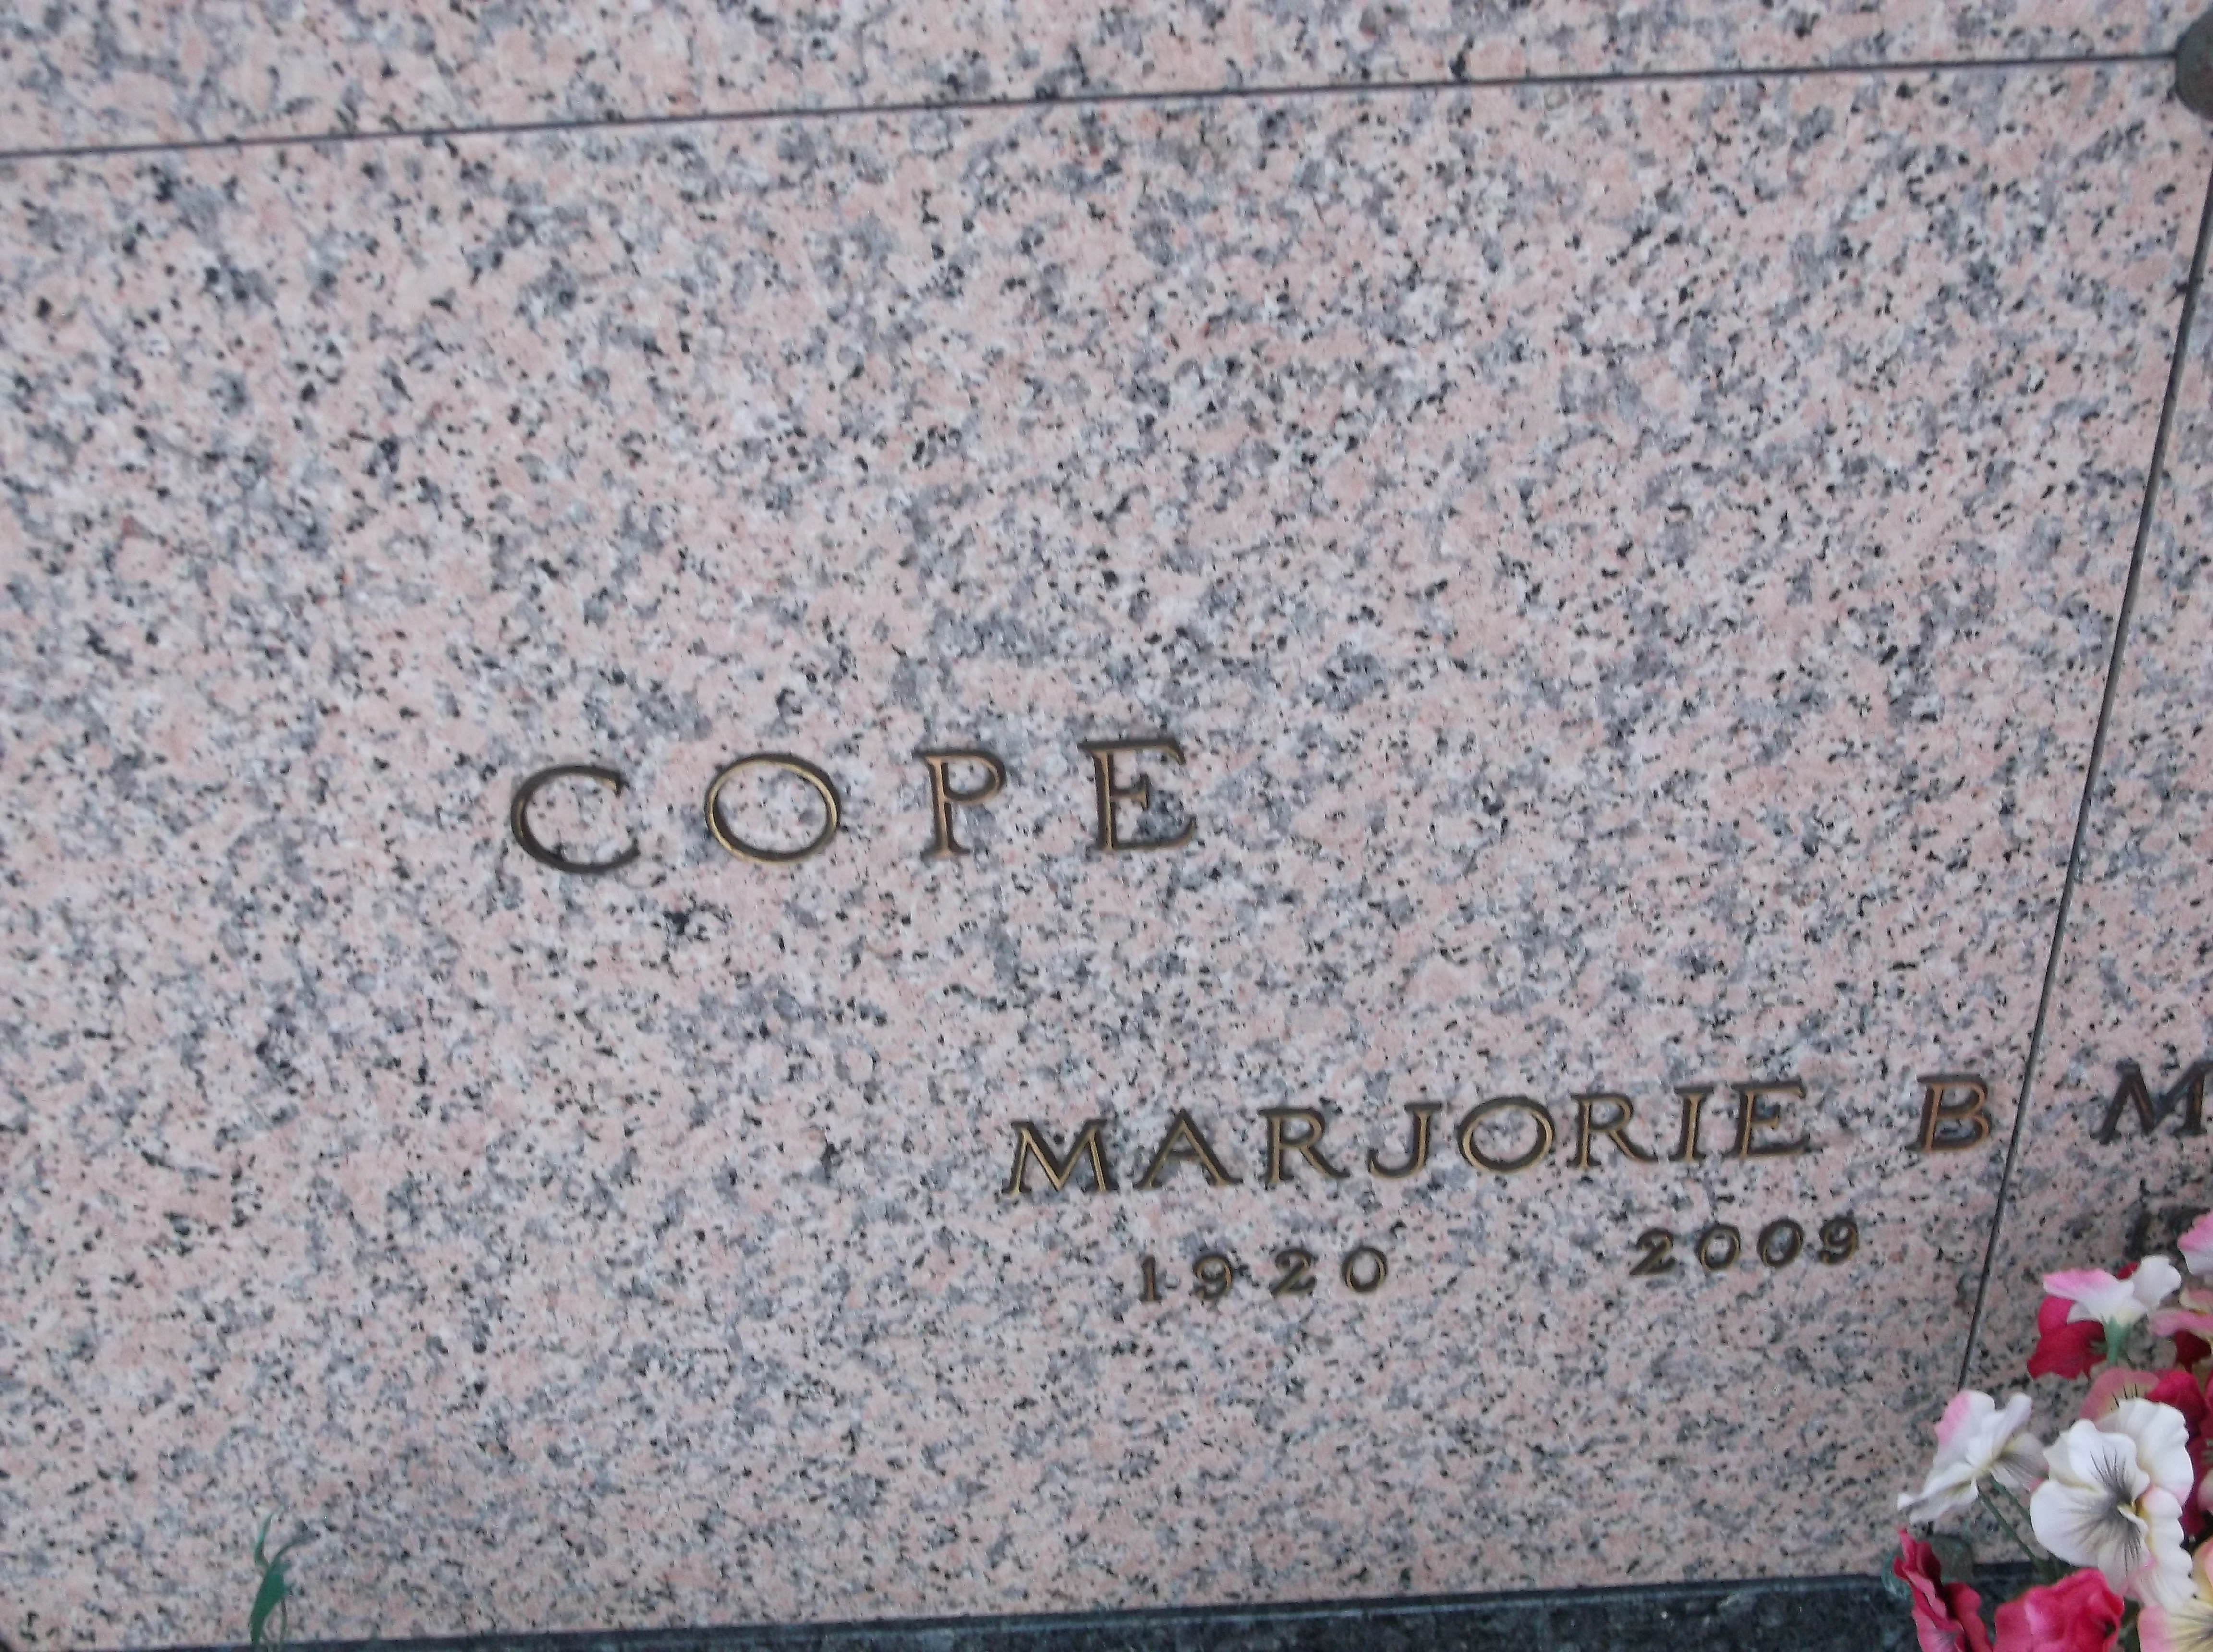 Marjorie B Cope